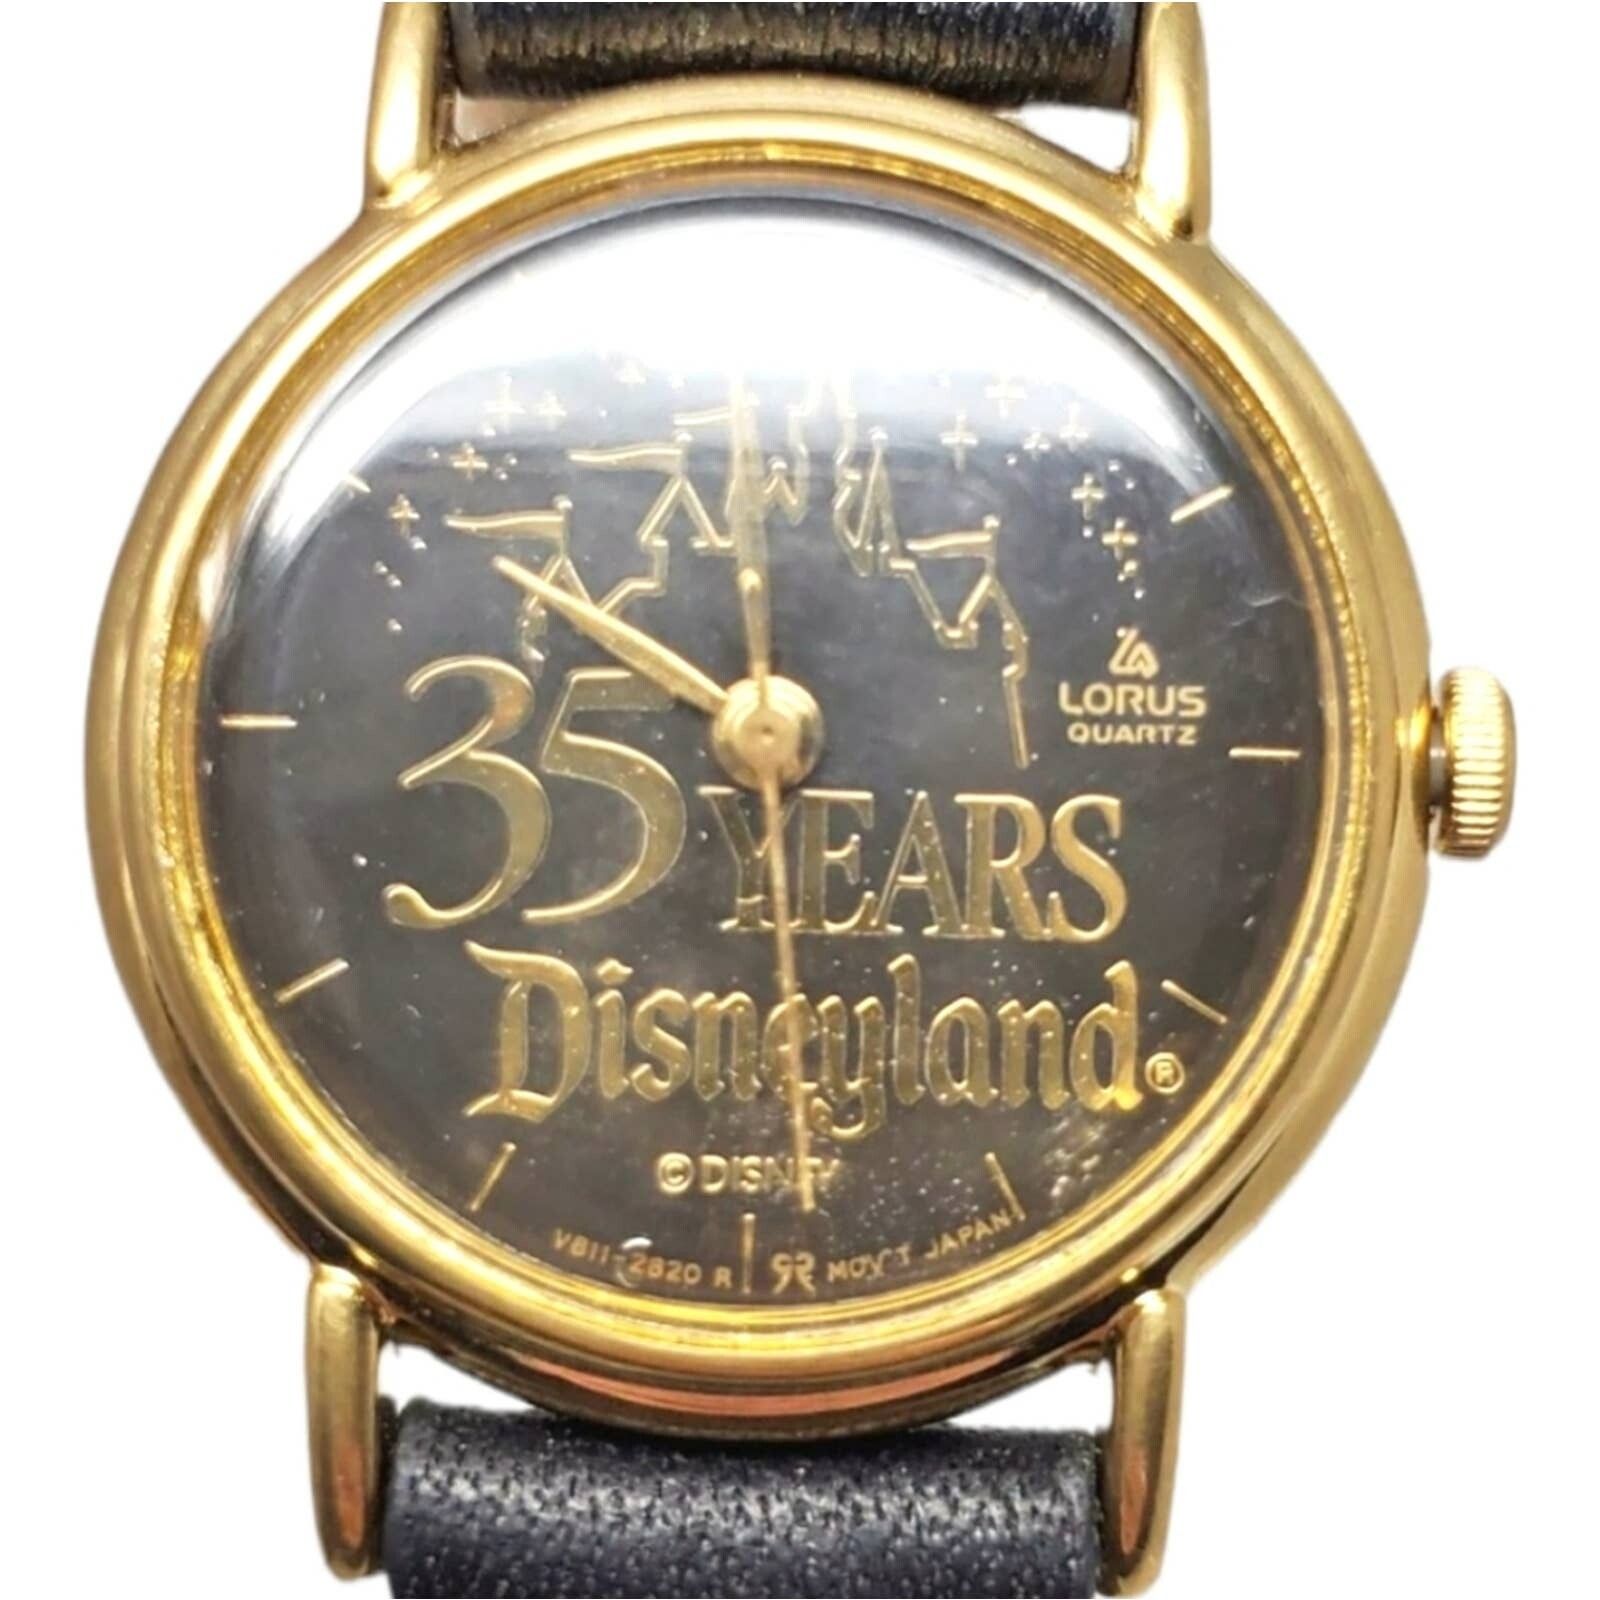 Disney Disneyland 35 Years Celebration VTG Black & Gold Watch Size ONE SIZE - 1 Preview